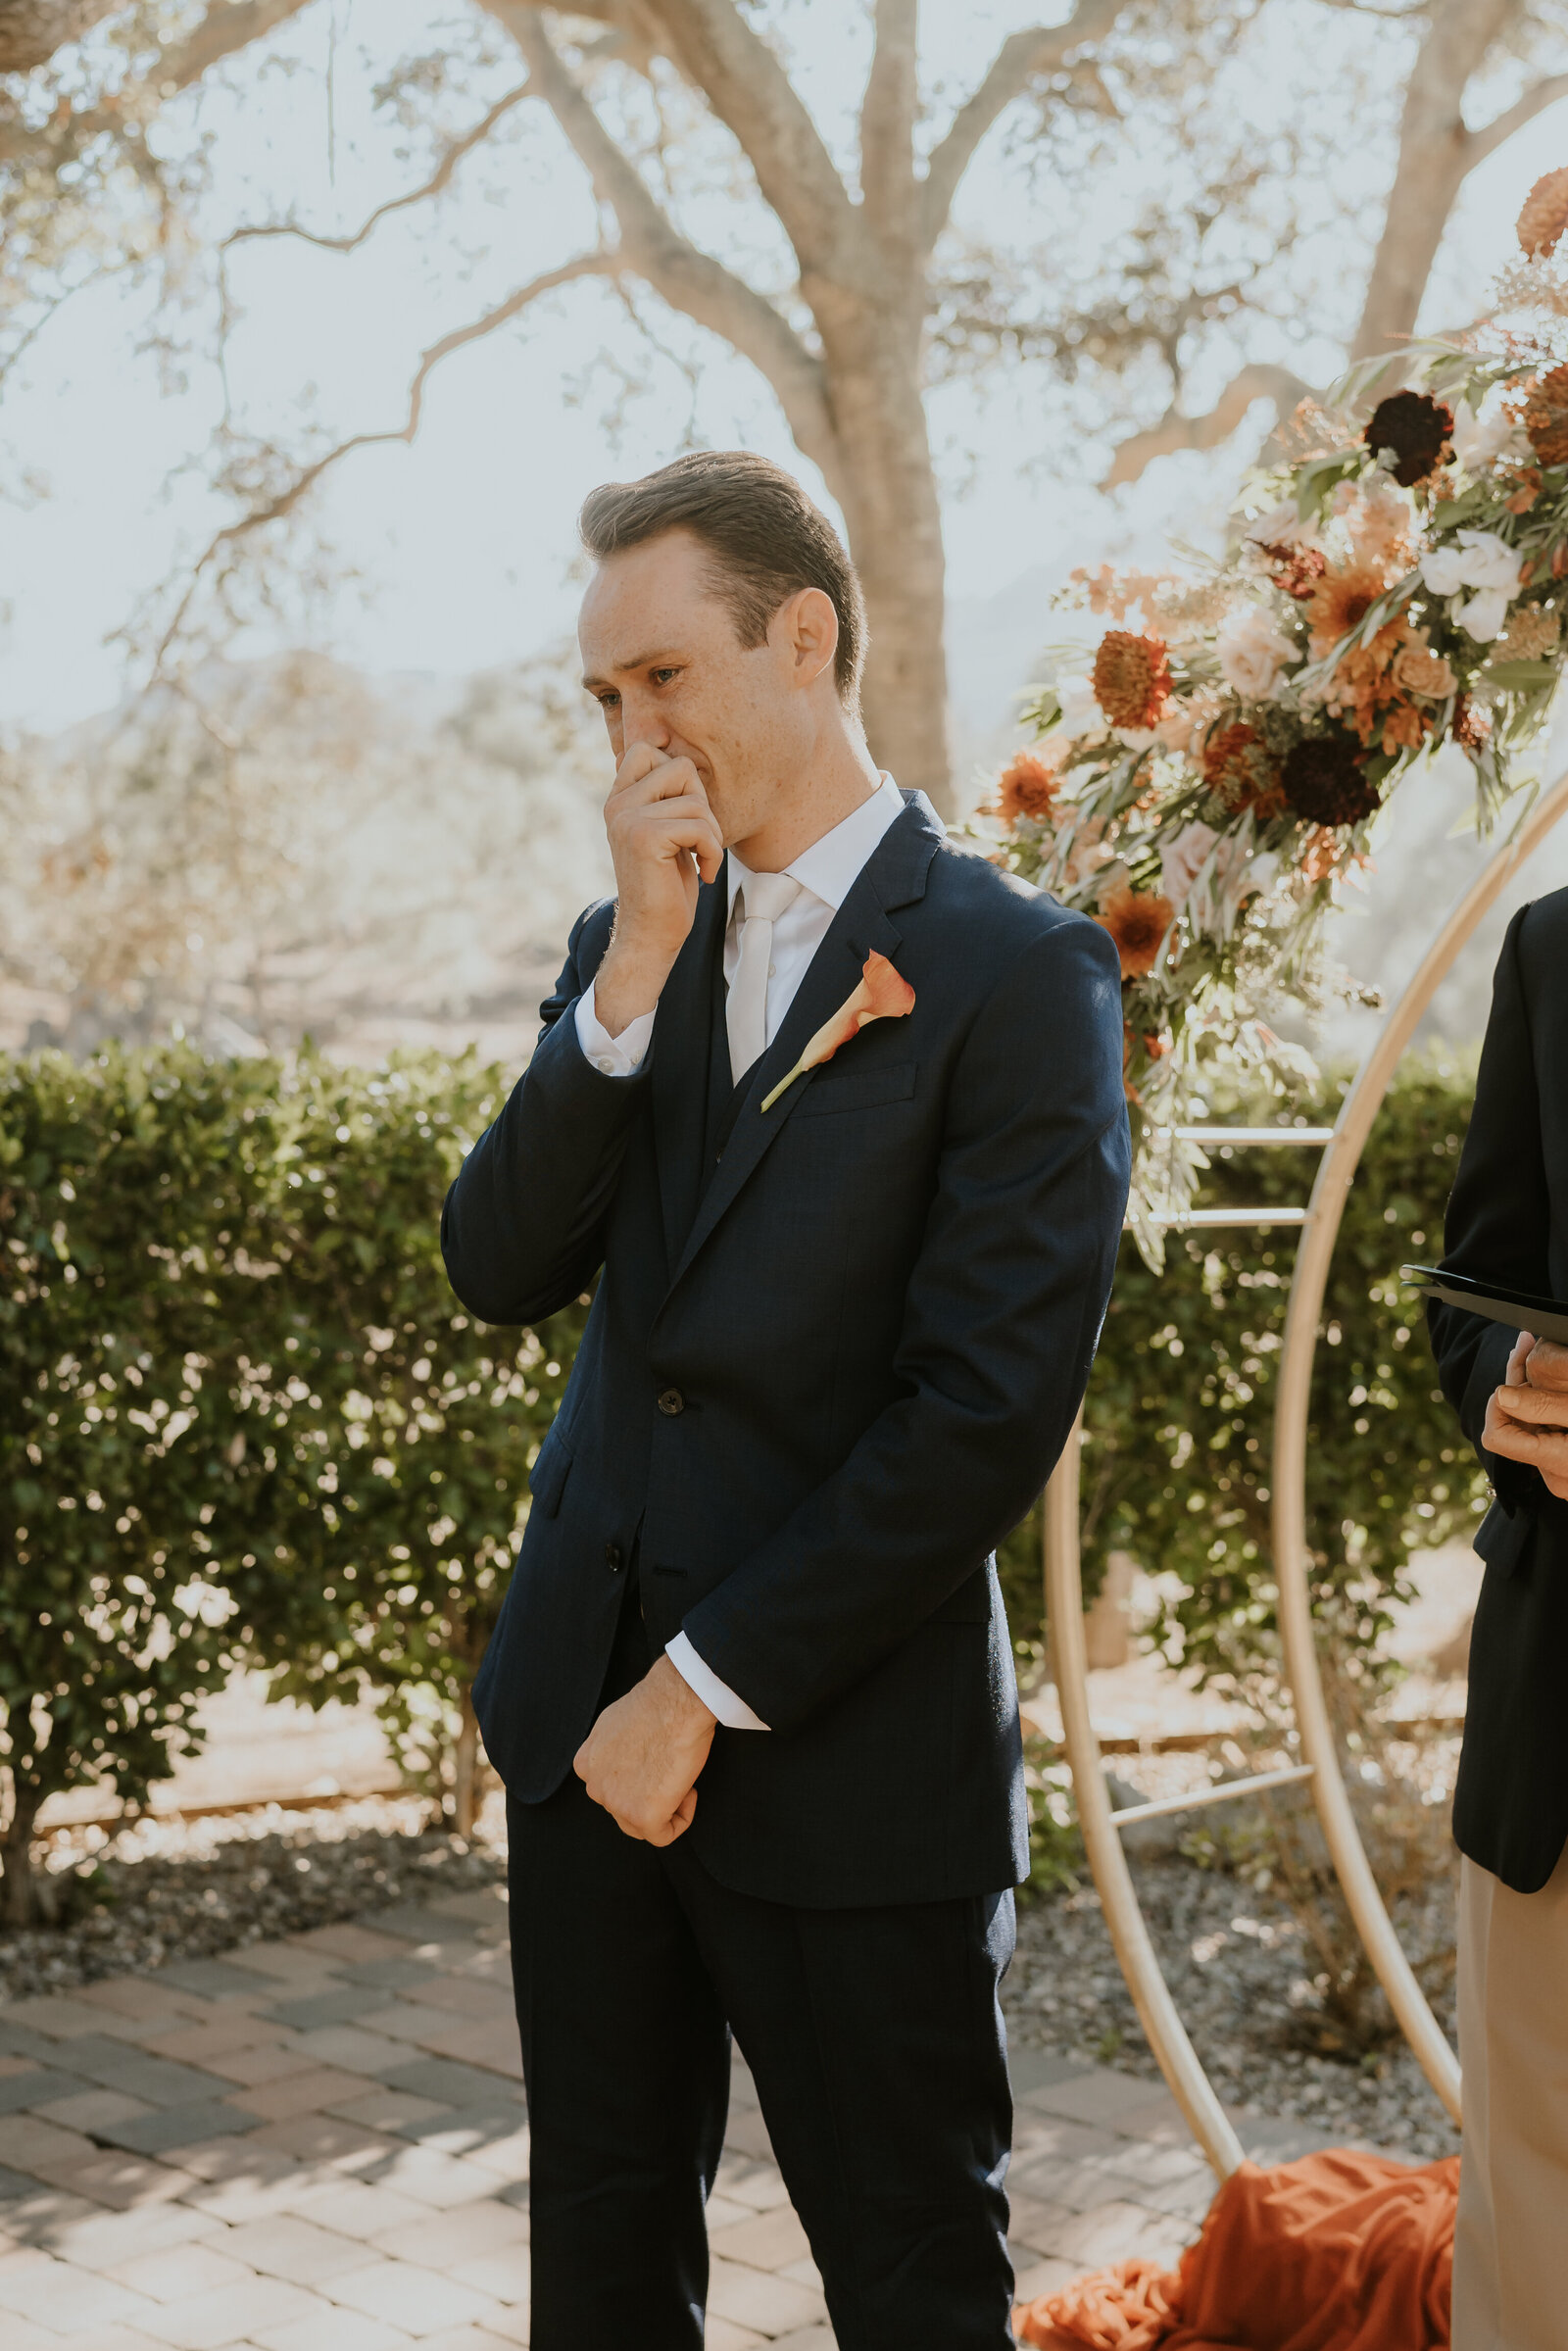 Emotional groom on wedding day Temecula, California Wedding photographer Yescphotography